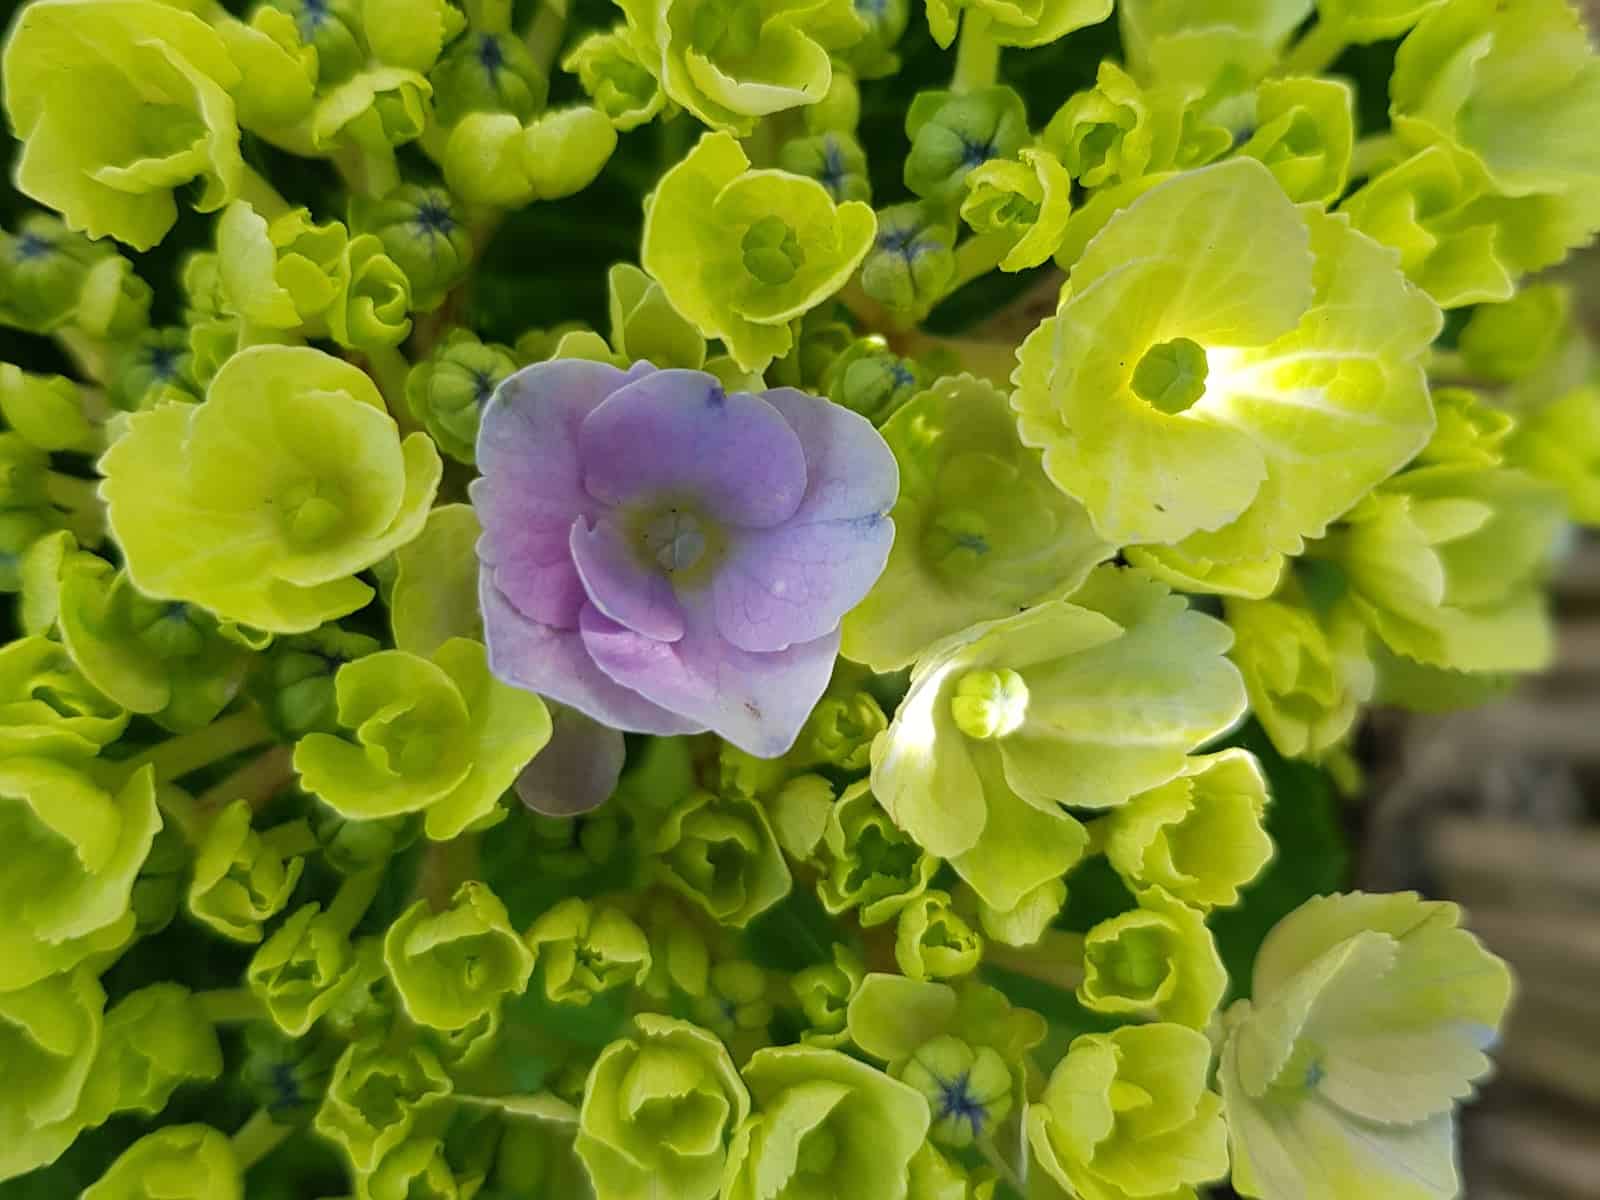 Magical Hydrangeas as a gift for garden lovers